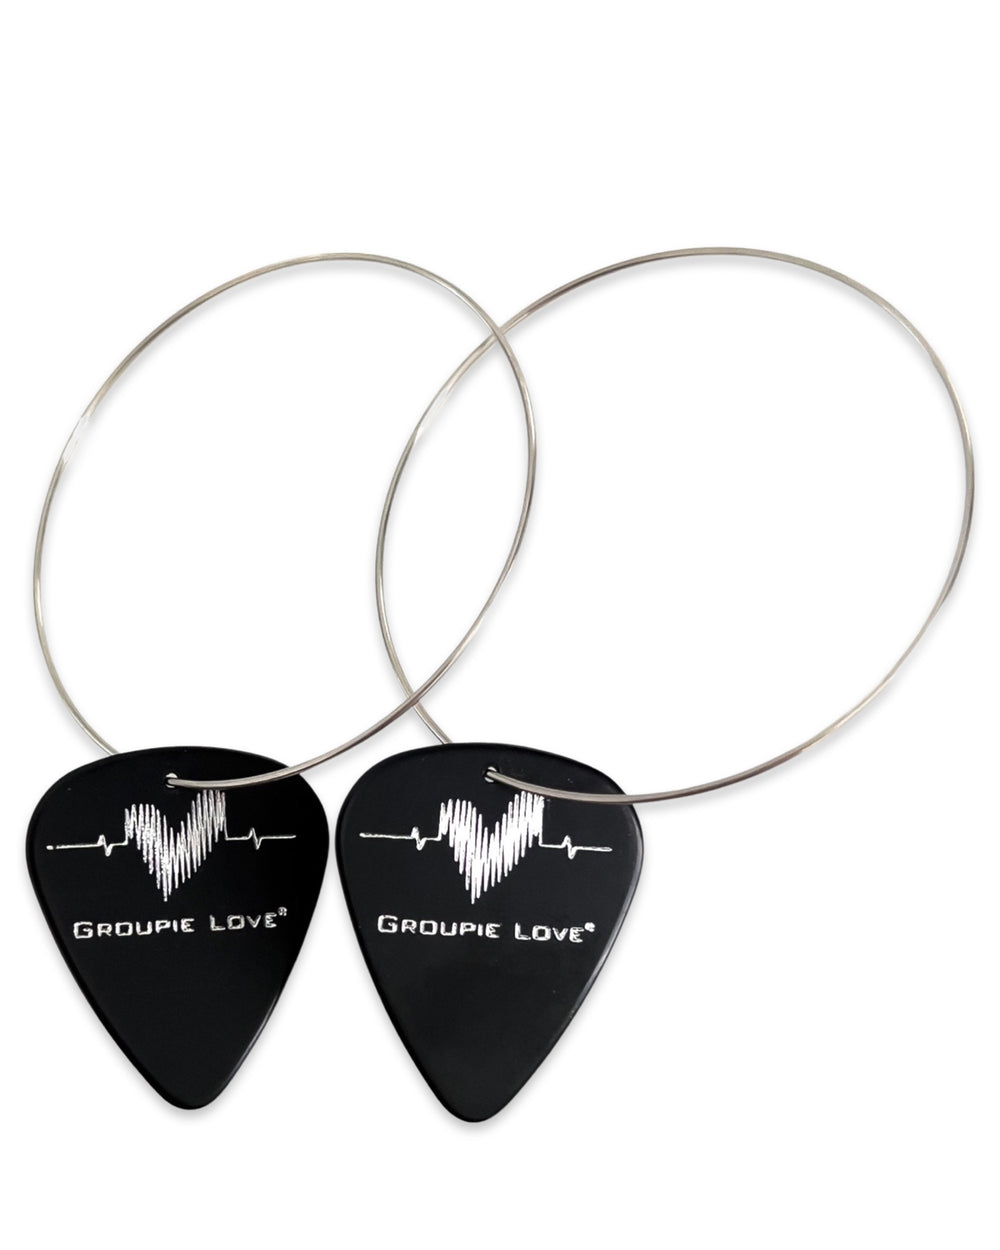 WS Groupie Love Black Silver Single Guitar Pick Earrings